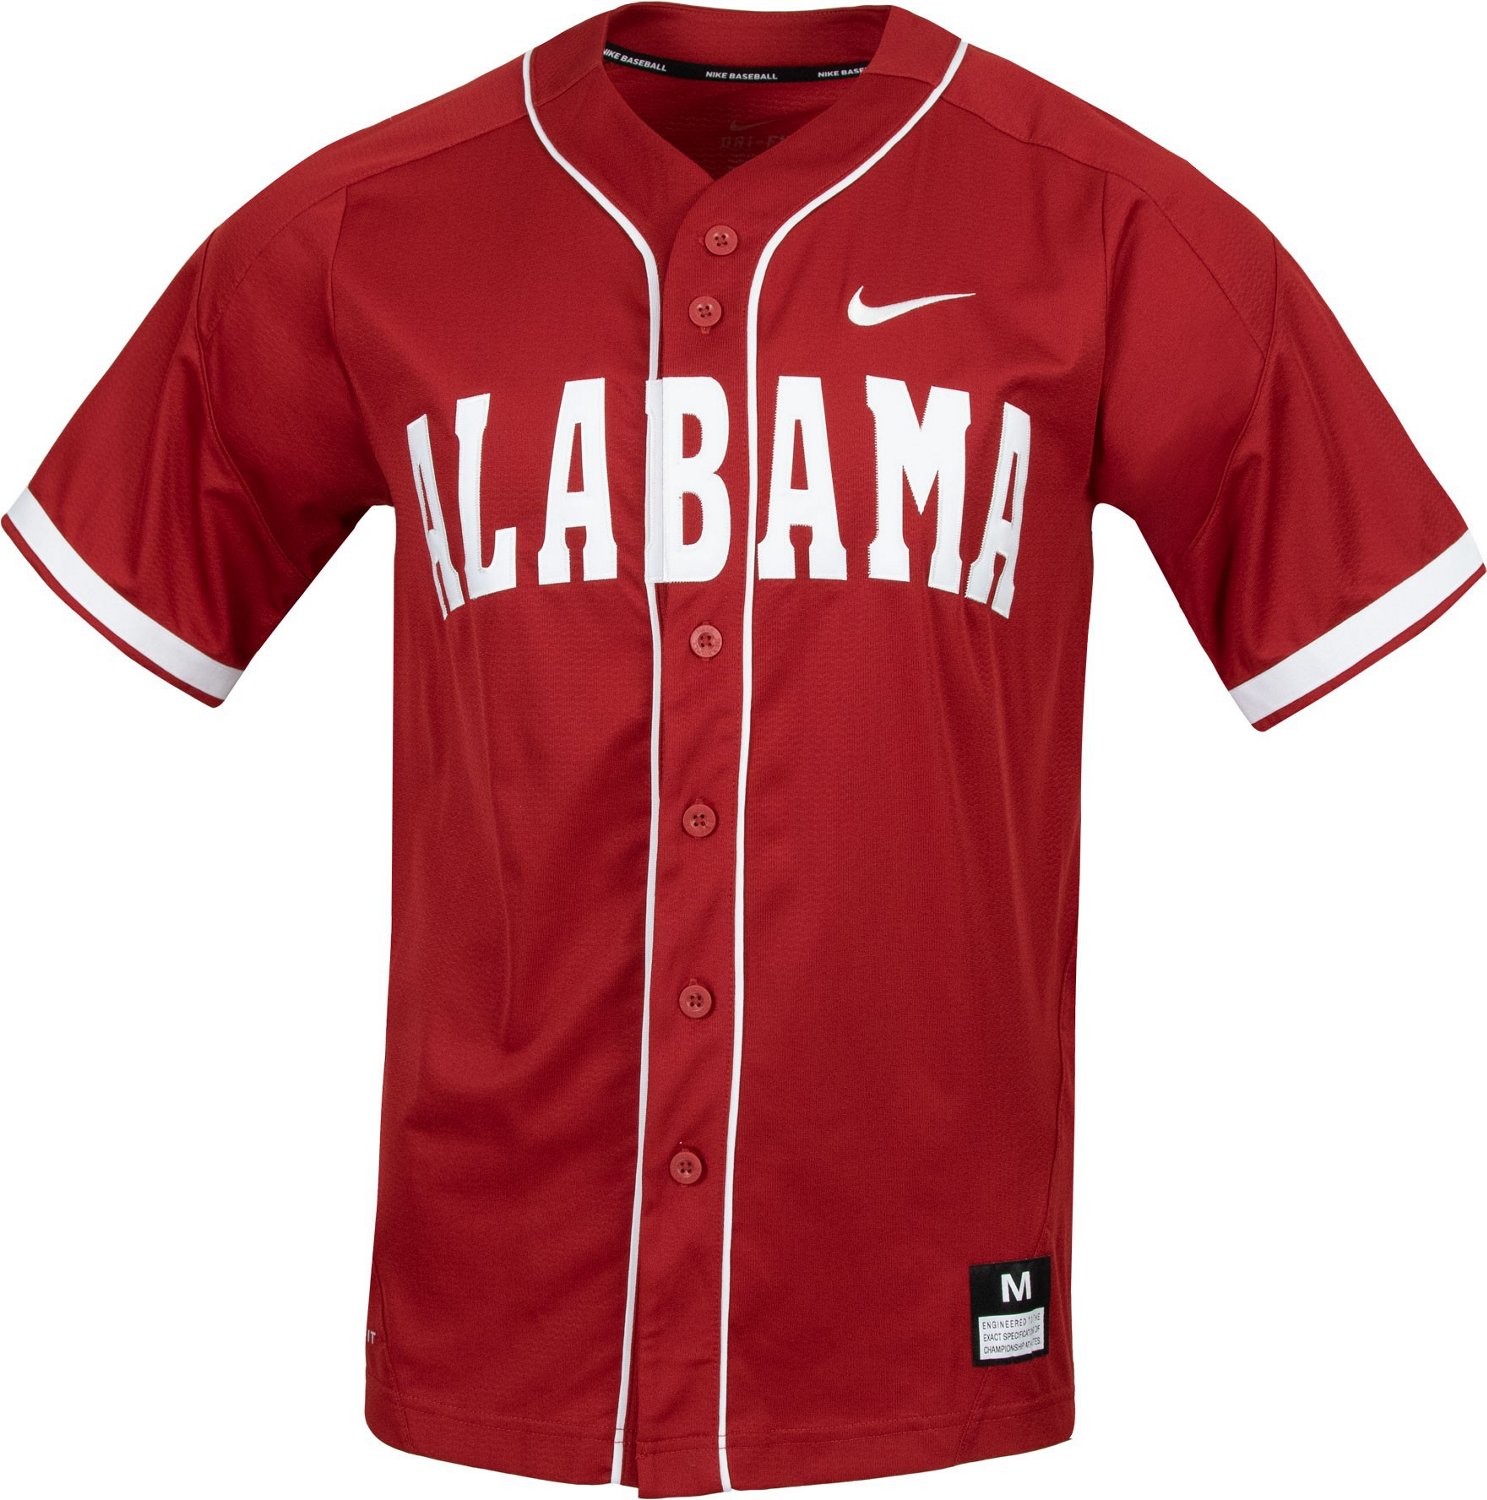 University of Alabama Shirts, Apparel, & Gear | Academy